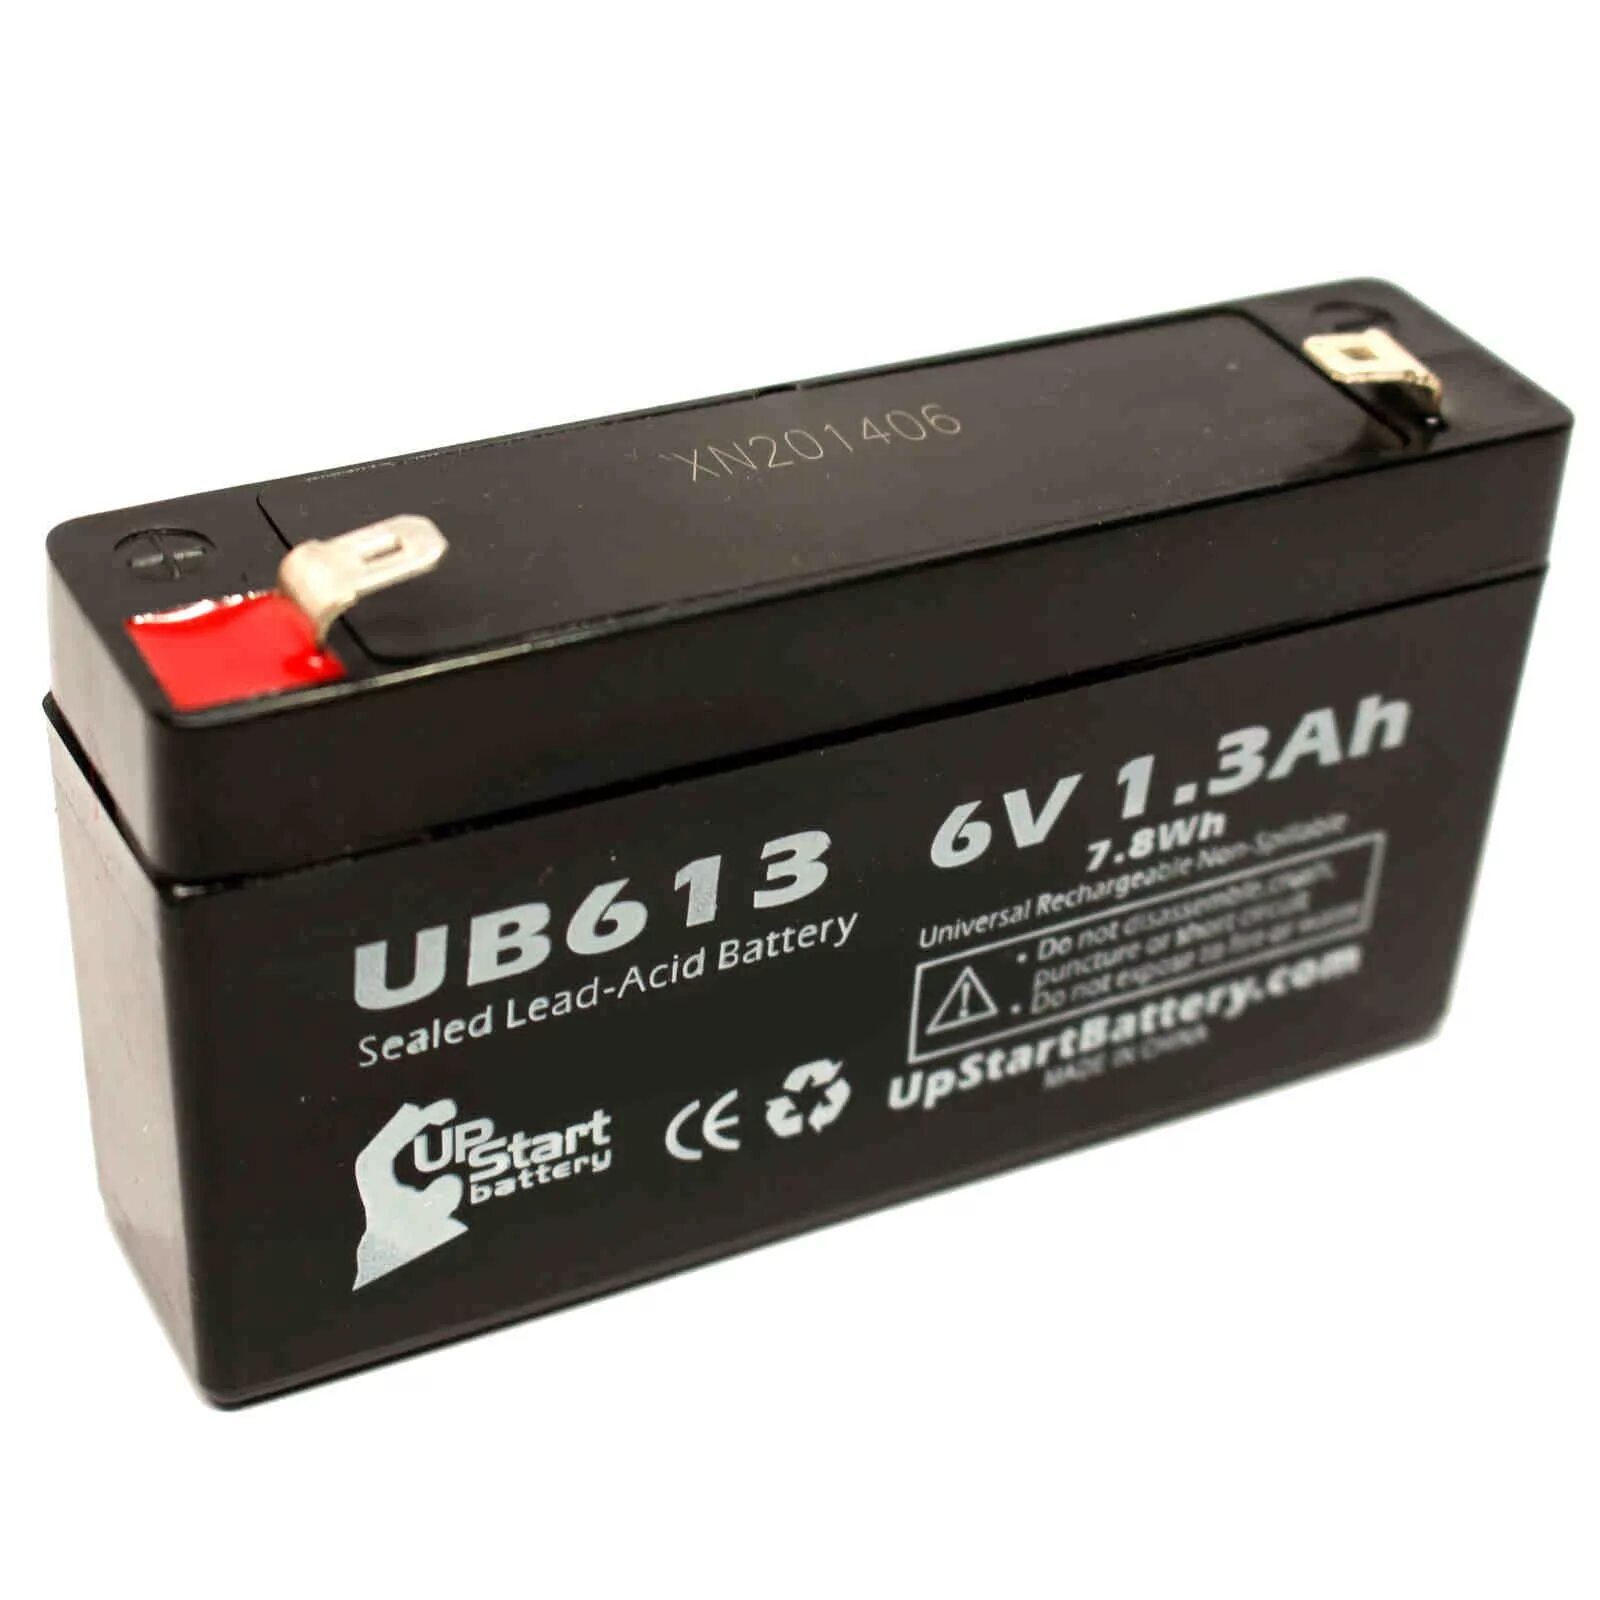 Battery 6v. Sealed Rechargeable lead-acid Battery 6v. Аккумулятор Sealed Rechargeable lead-acid Battery 6v. Аккумулятор Leoch DJW 12-1.3. Leoch DJW 12-2,3 12v 2,3ah.